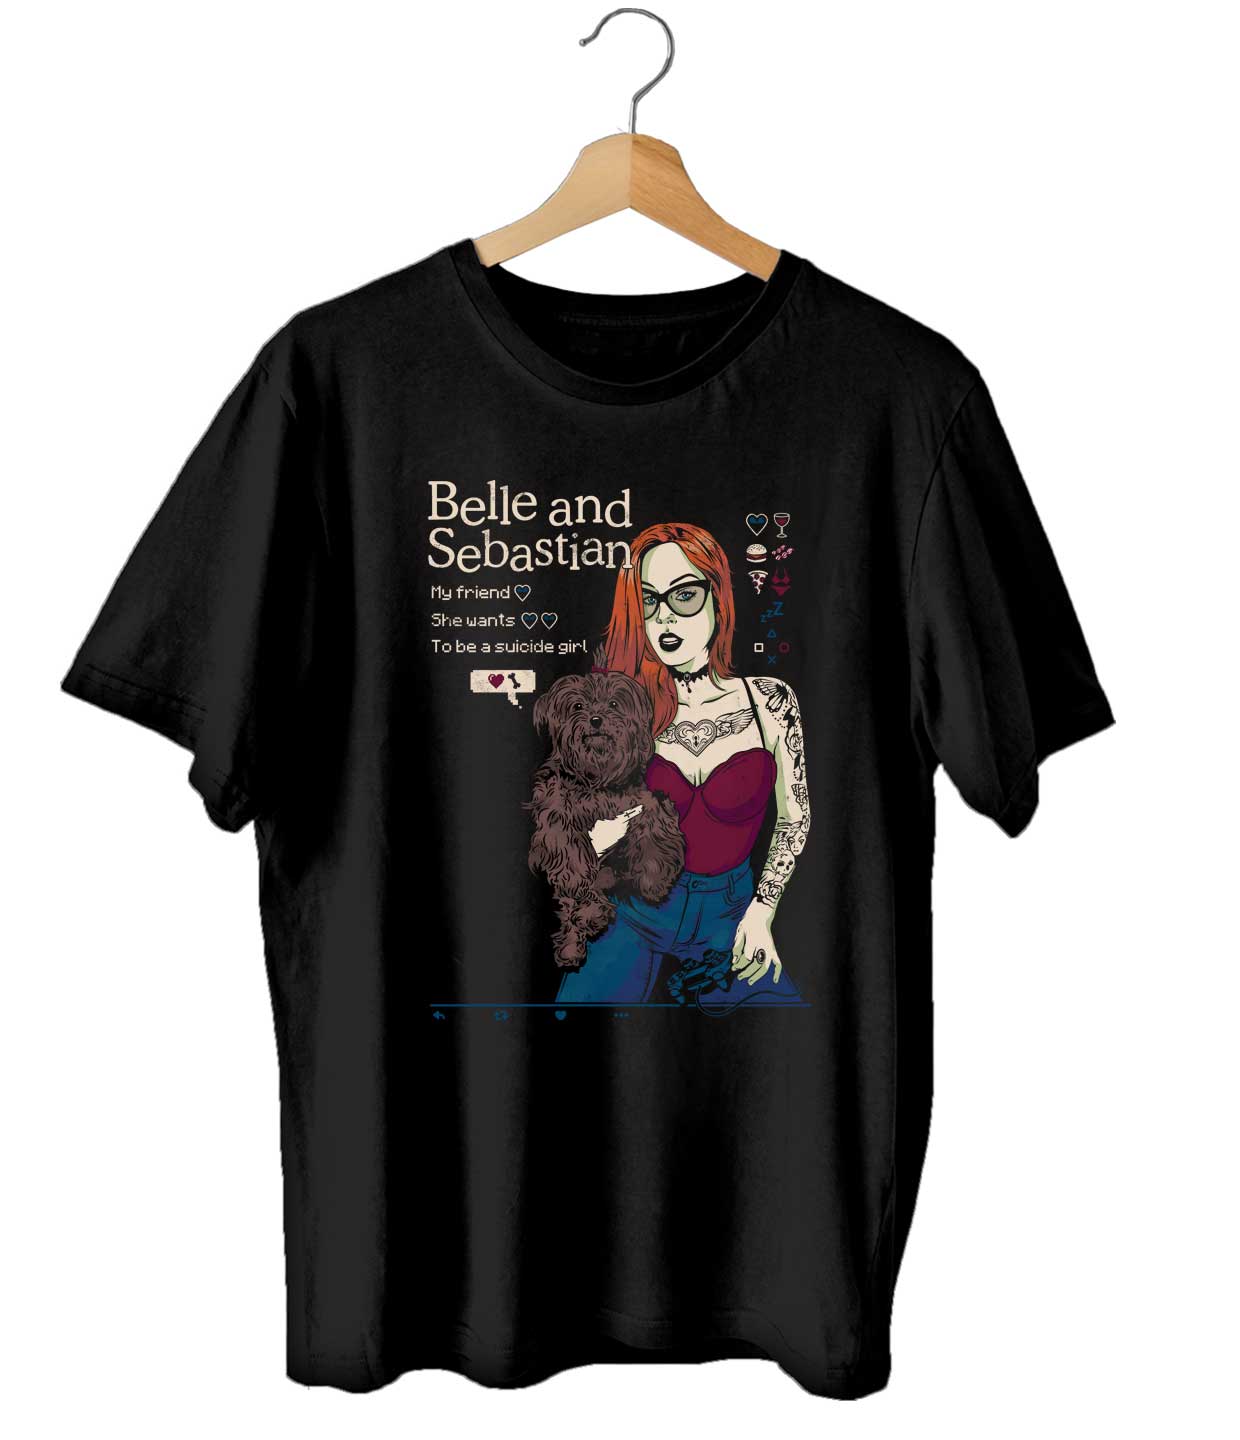 Camiseta Suicide Girl - Belle and Sebastian - Masculino